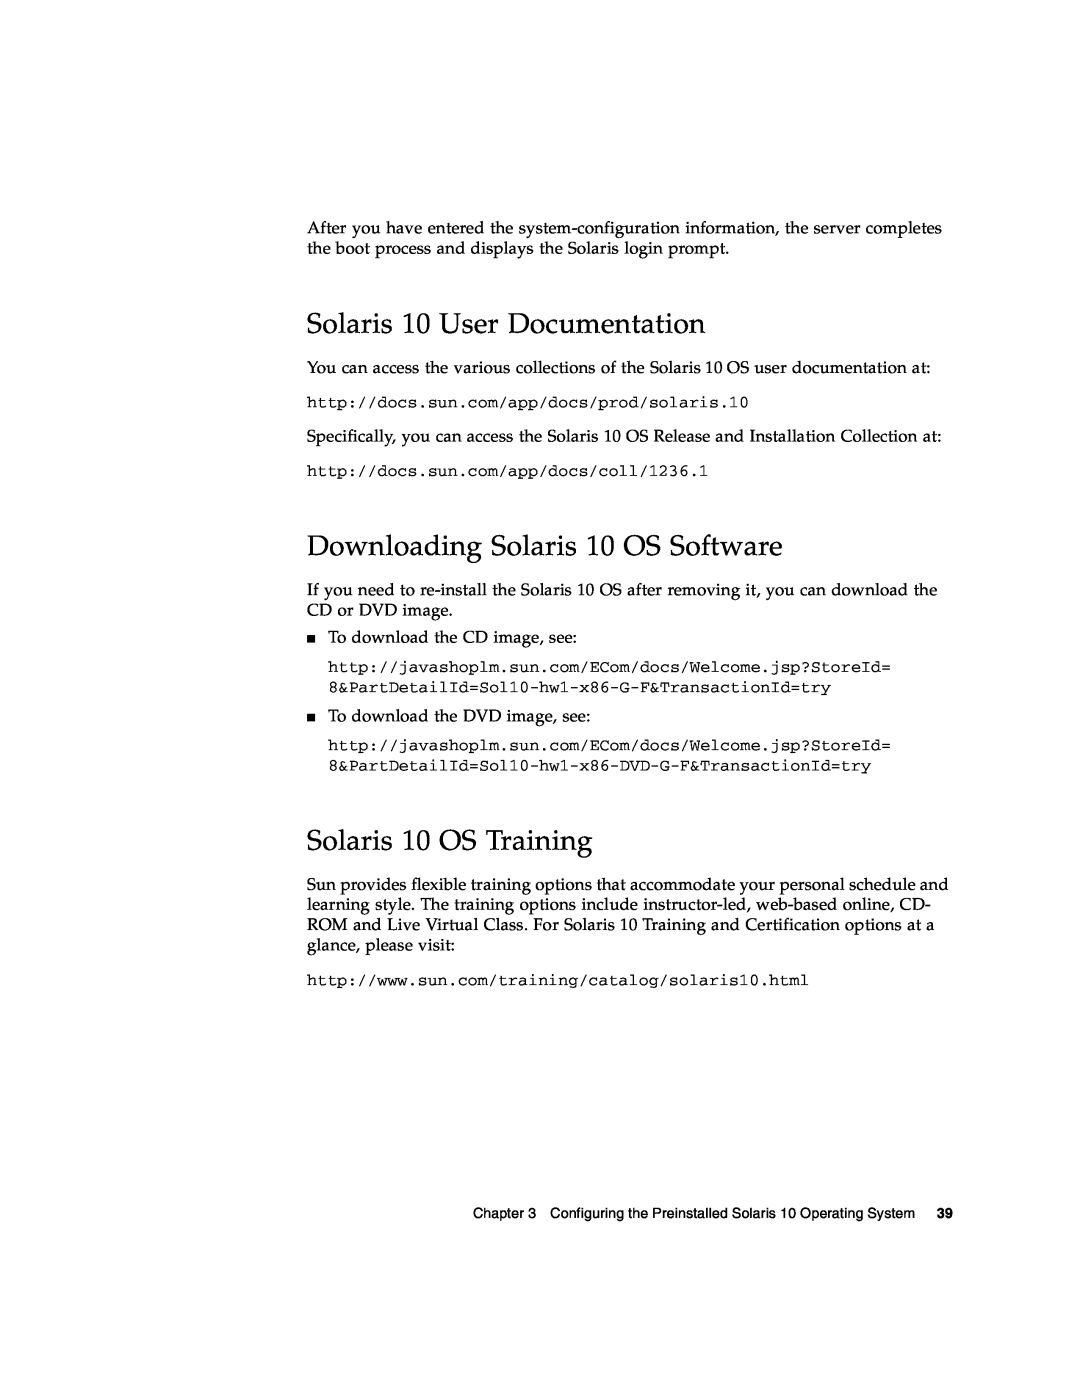 Sun Microsystems X4200 M2 Solaris 10 User Documentation, Downloading Solaris 10 OS Software, Solaris 10 OS Training 